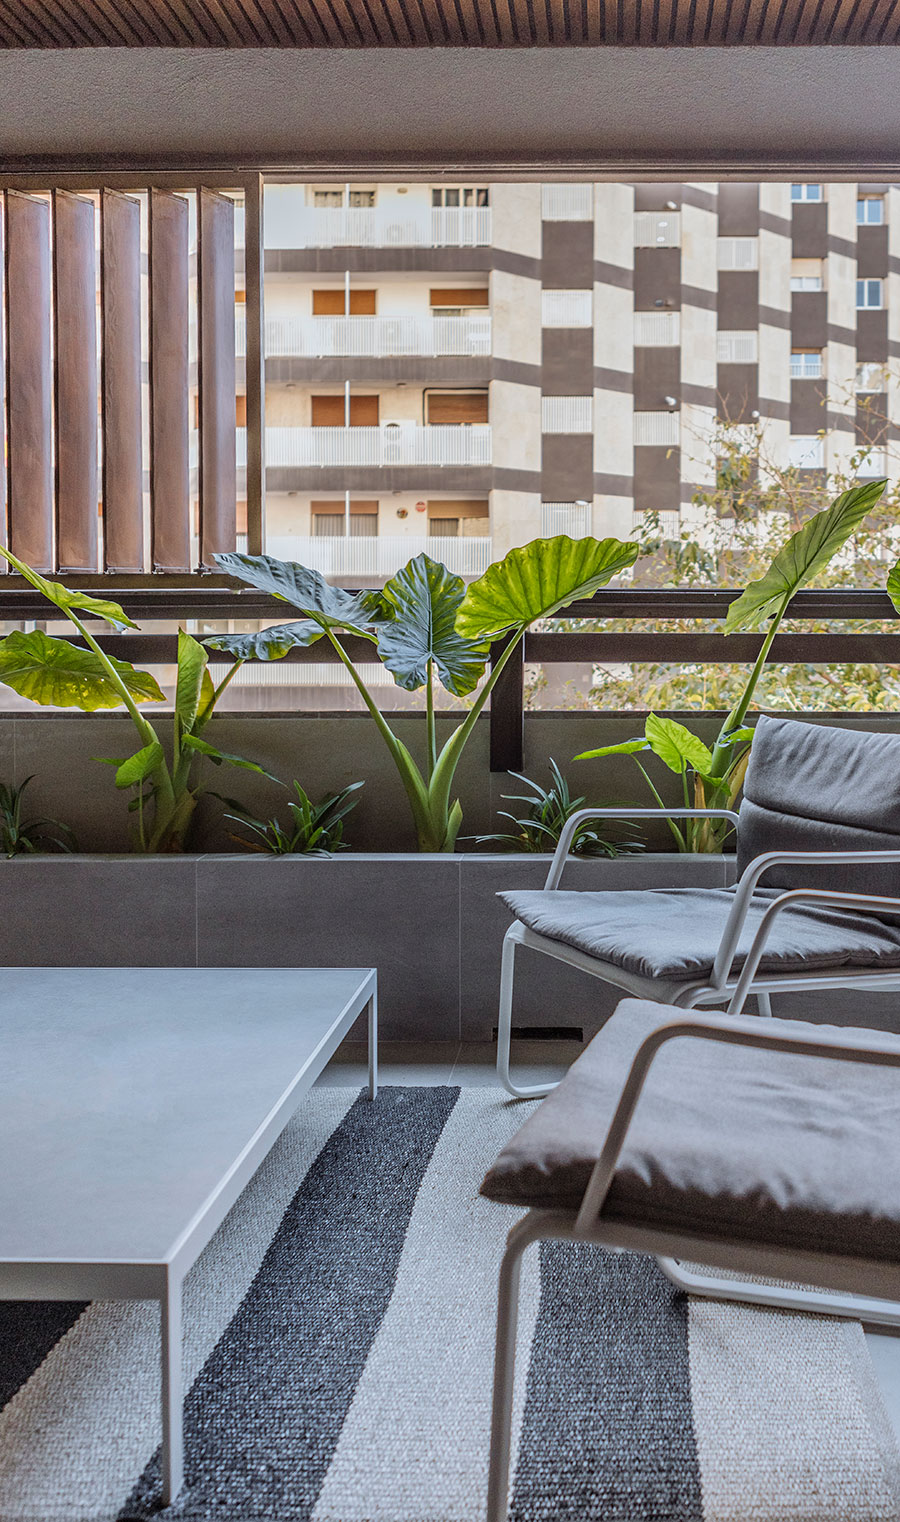 Dobleese reforma interiorismo terraza exterior mobiliario moderno plantas naturales apartamento